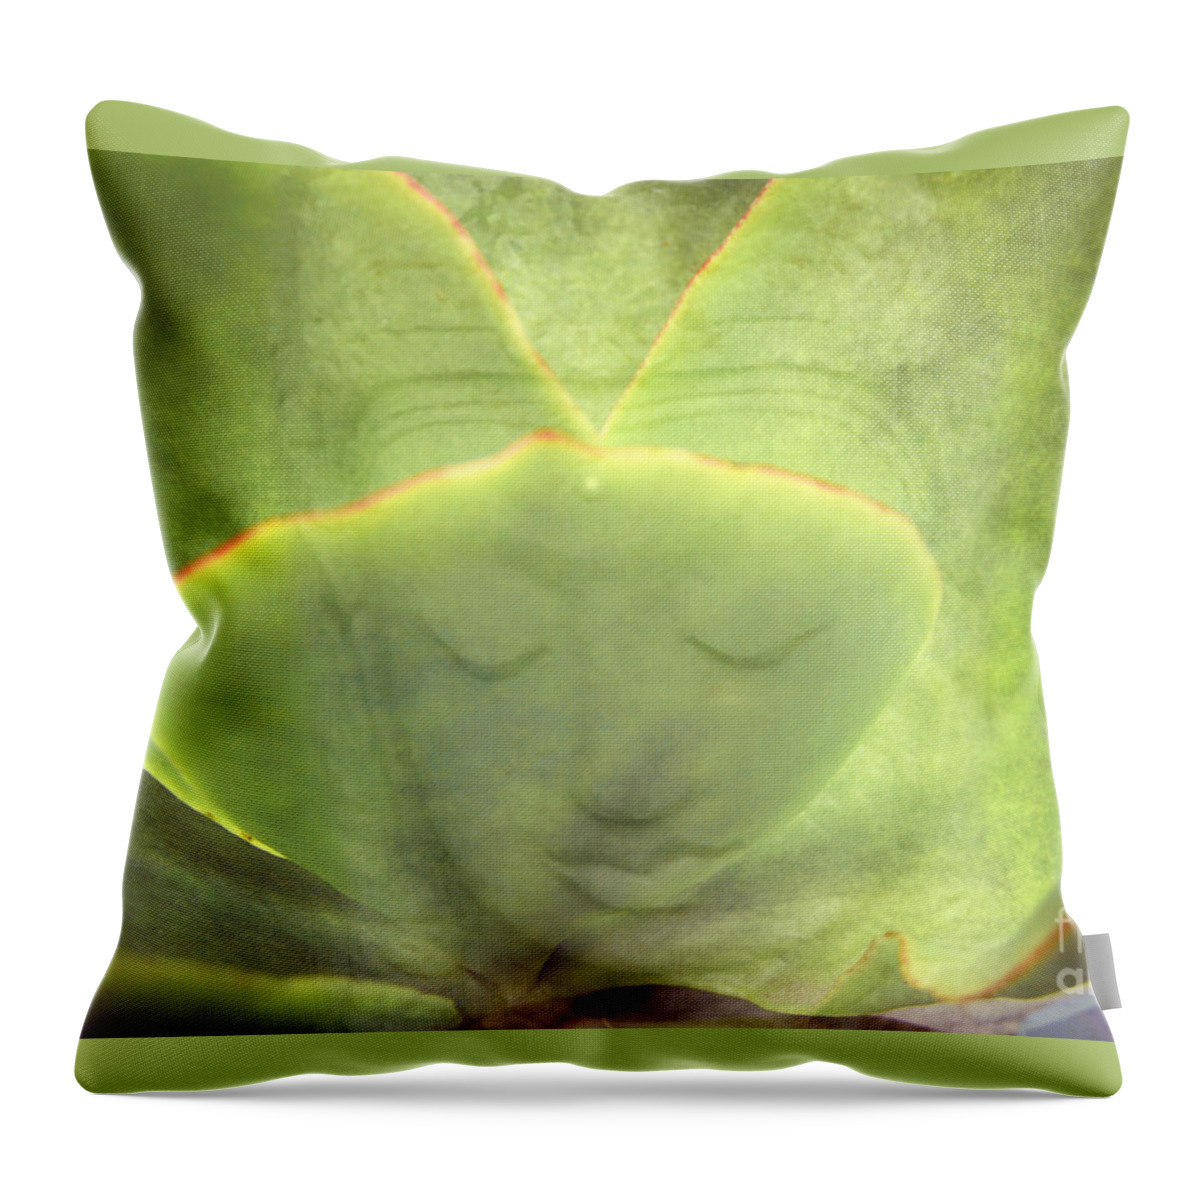 Buddha Throw Pillow featuring the digital art Buddha Glow by Valerie Freeman